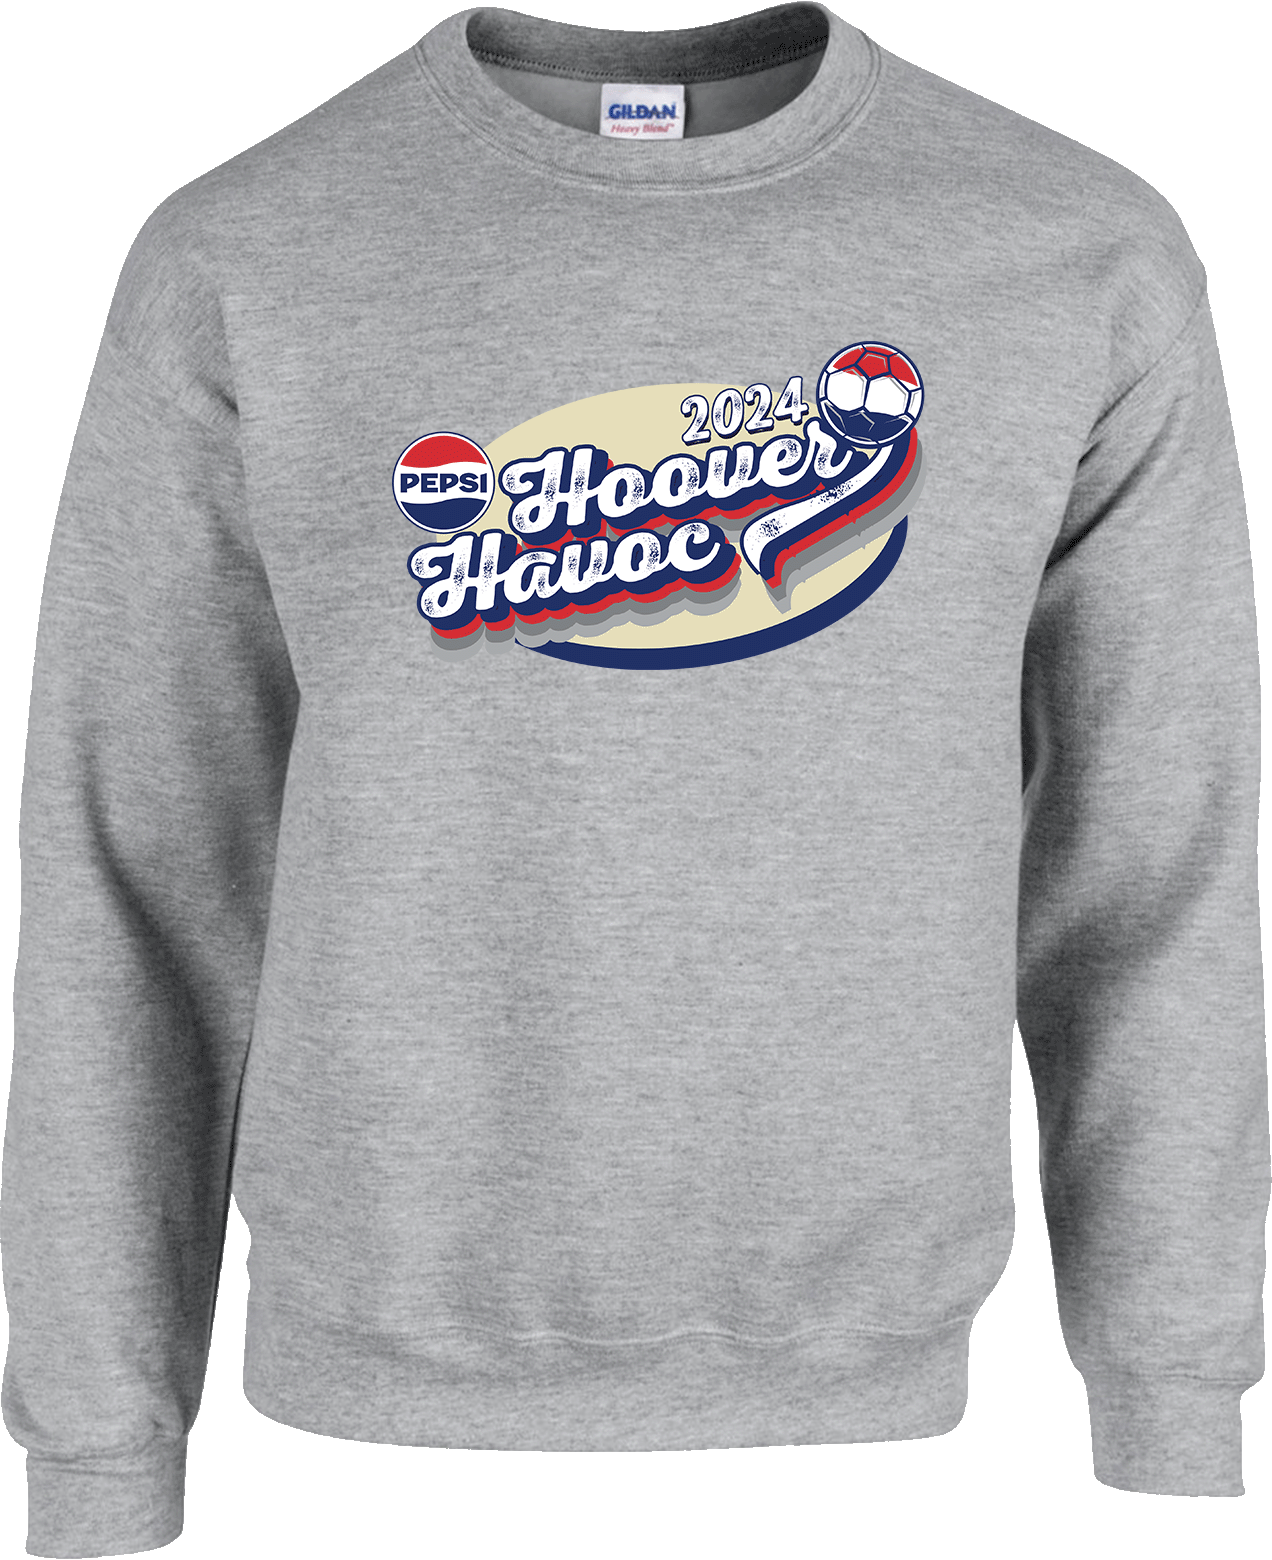 Crew Sweatershirt - 2024 Pepsi Hoover Havoc